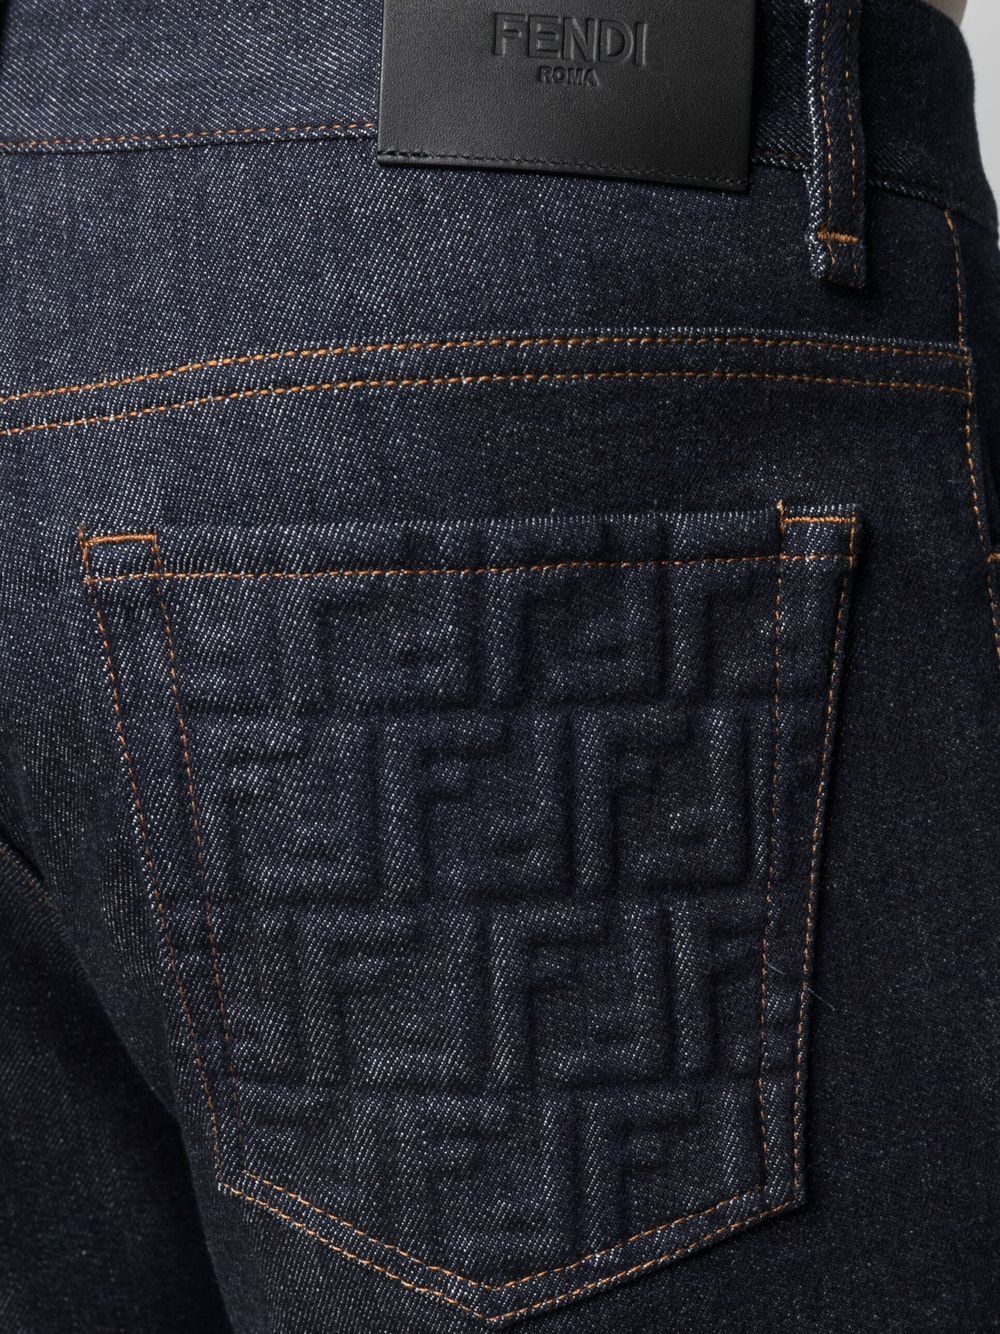 фото Fendi джинсы с логотипом